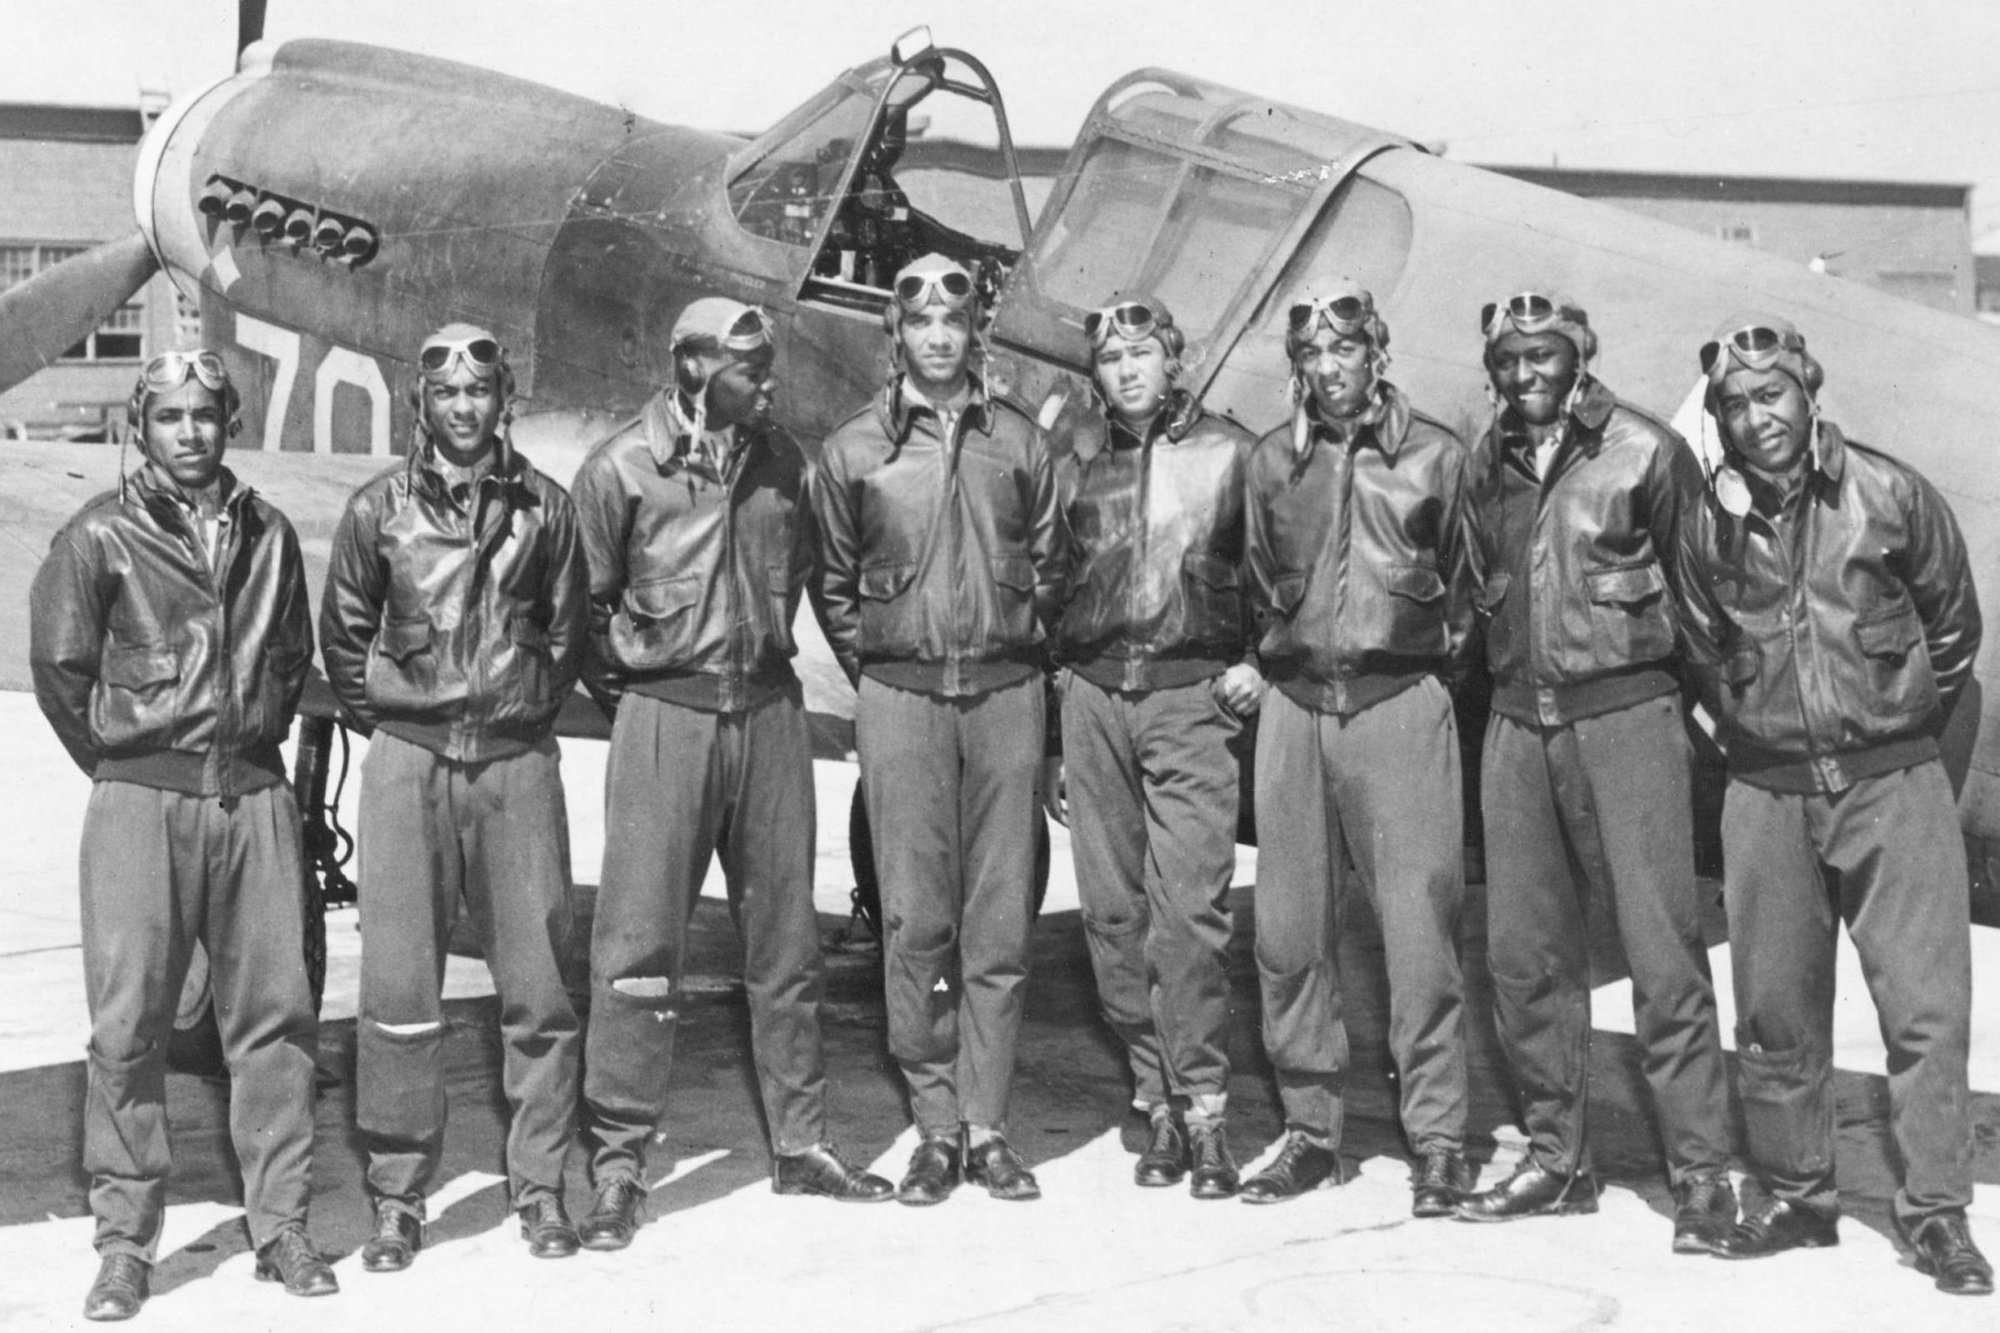 Tuskegee Airmen in A-2-style flight jackets